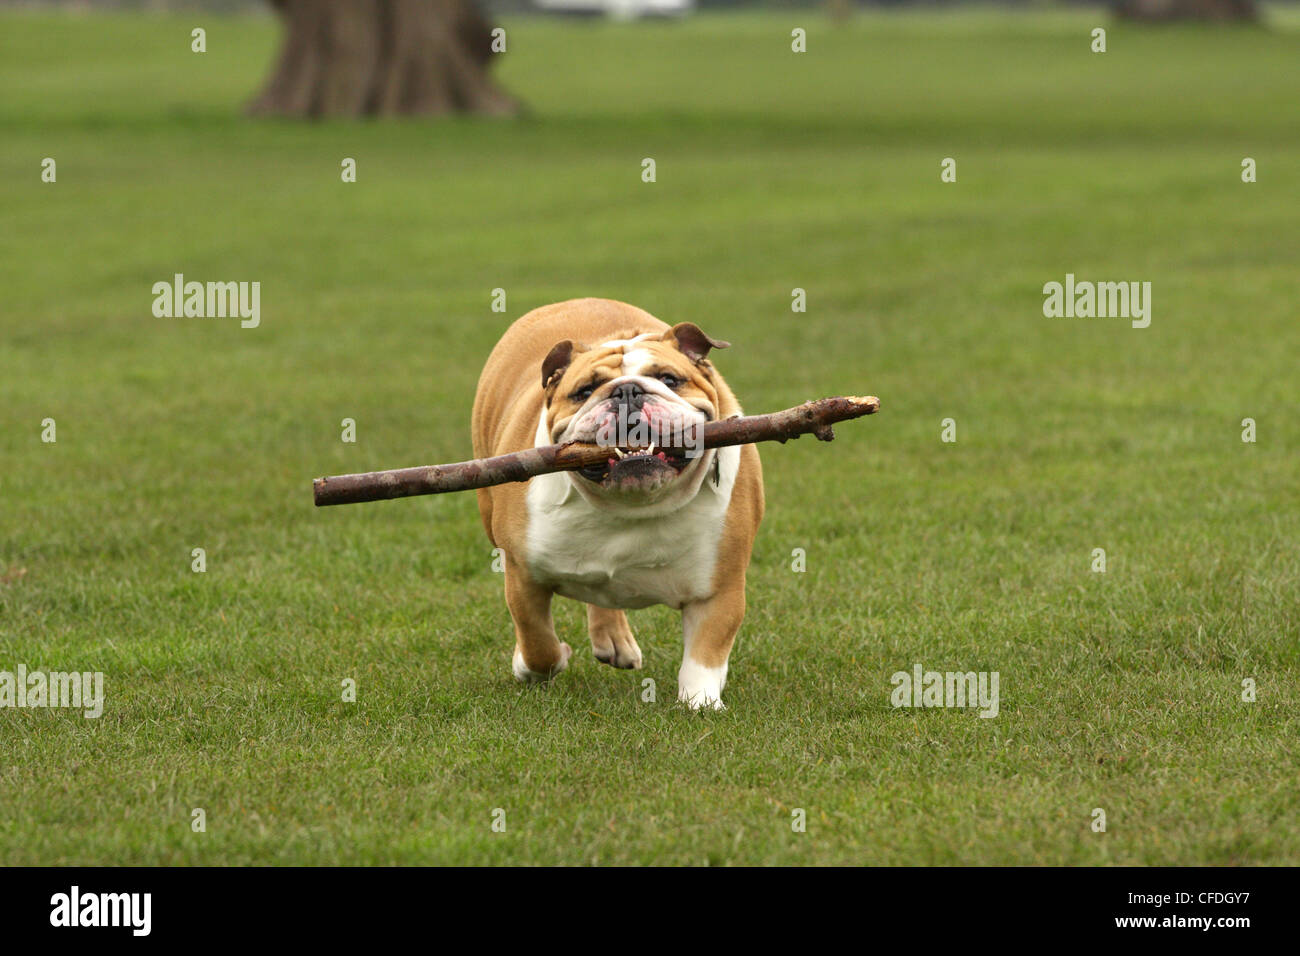 Bulldog with stick Stock Photo